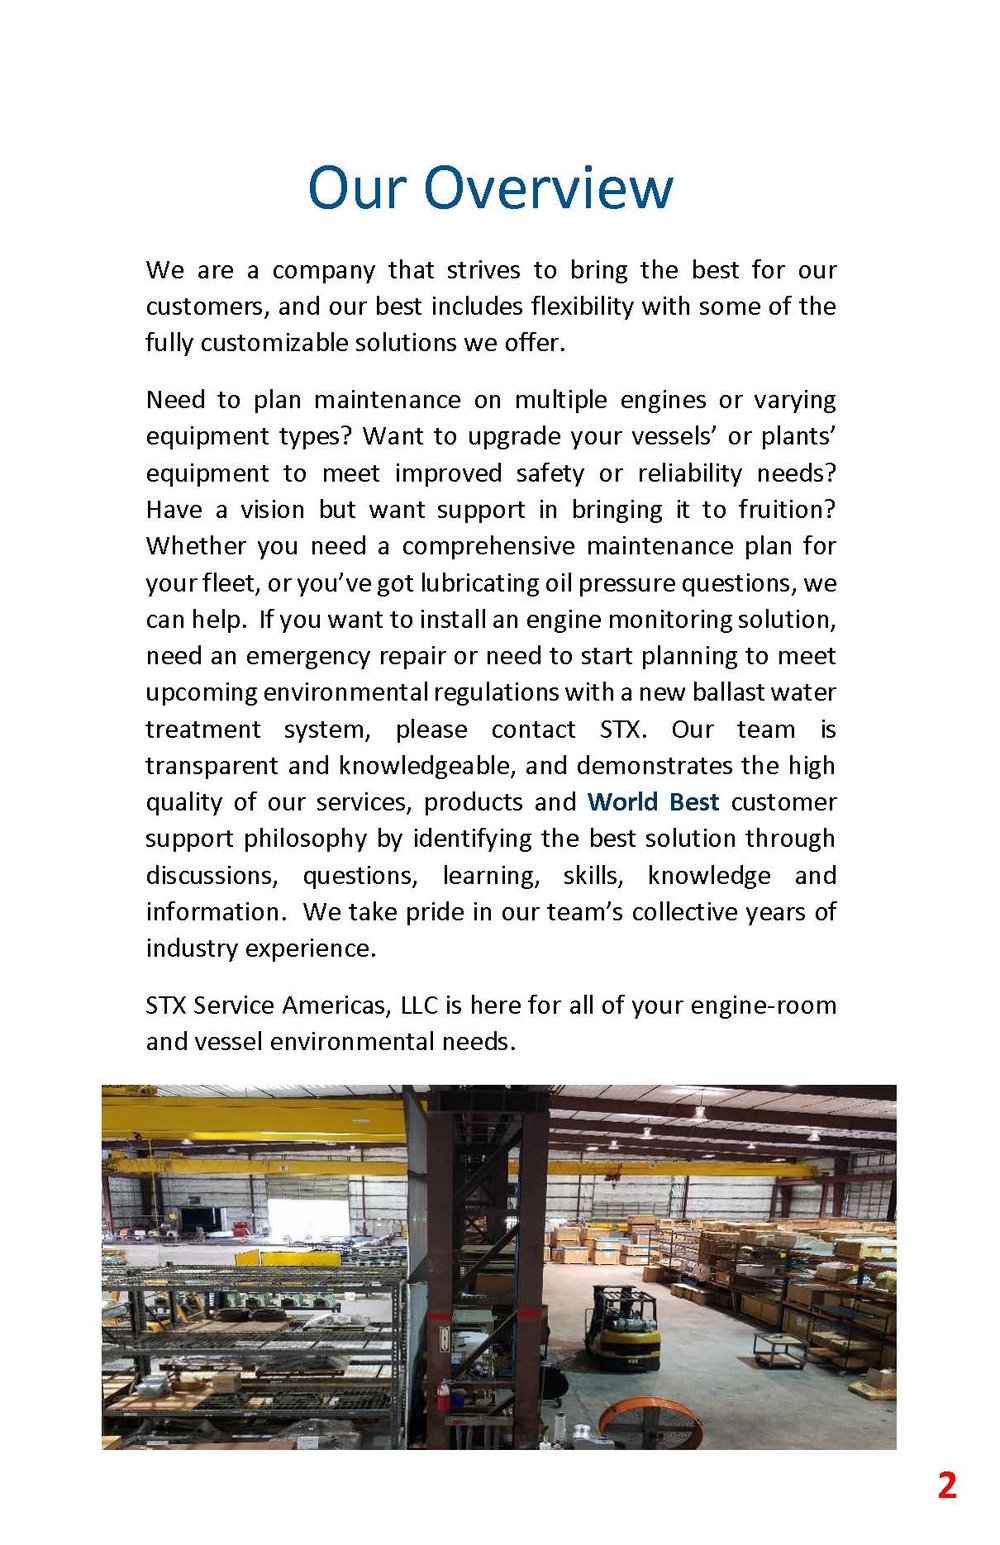 STXSA Brochure 2018_Page_04.jpg